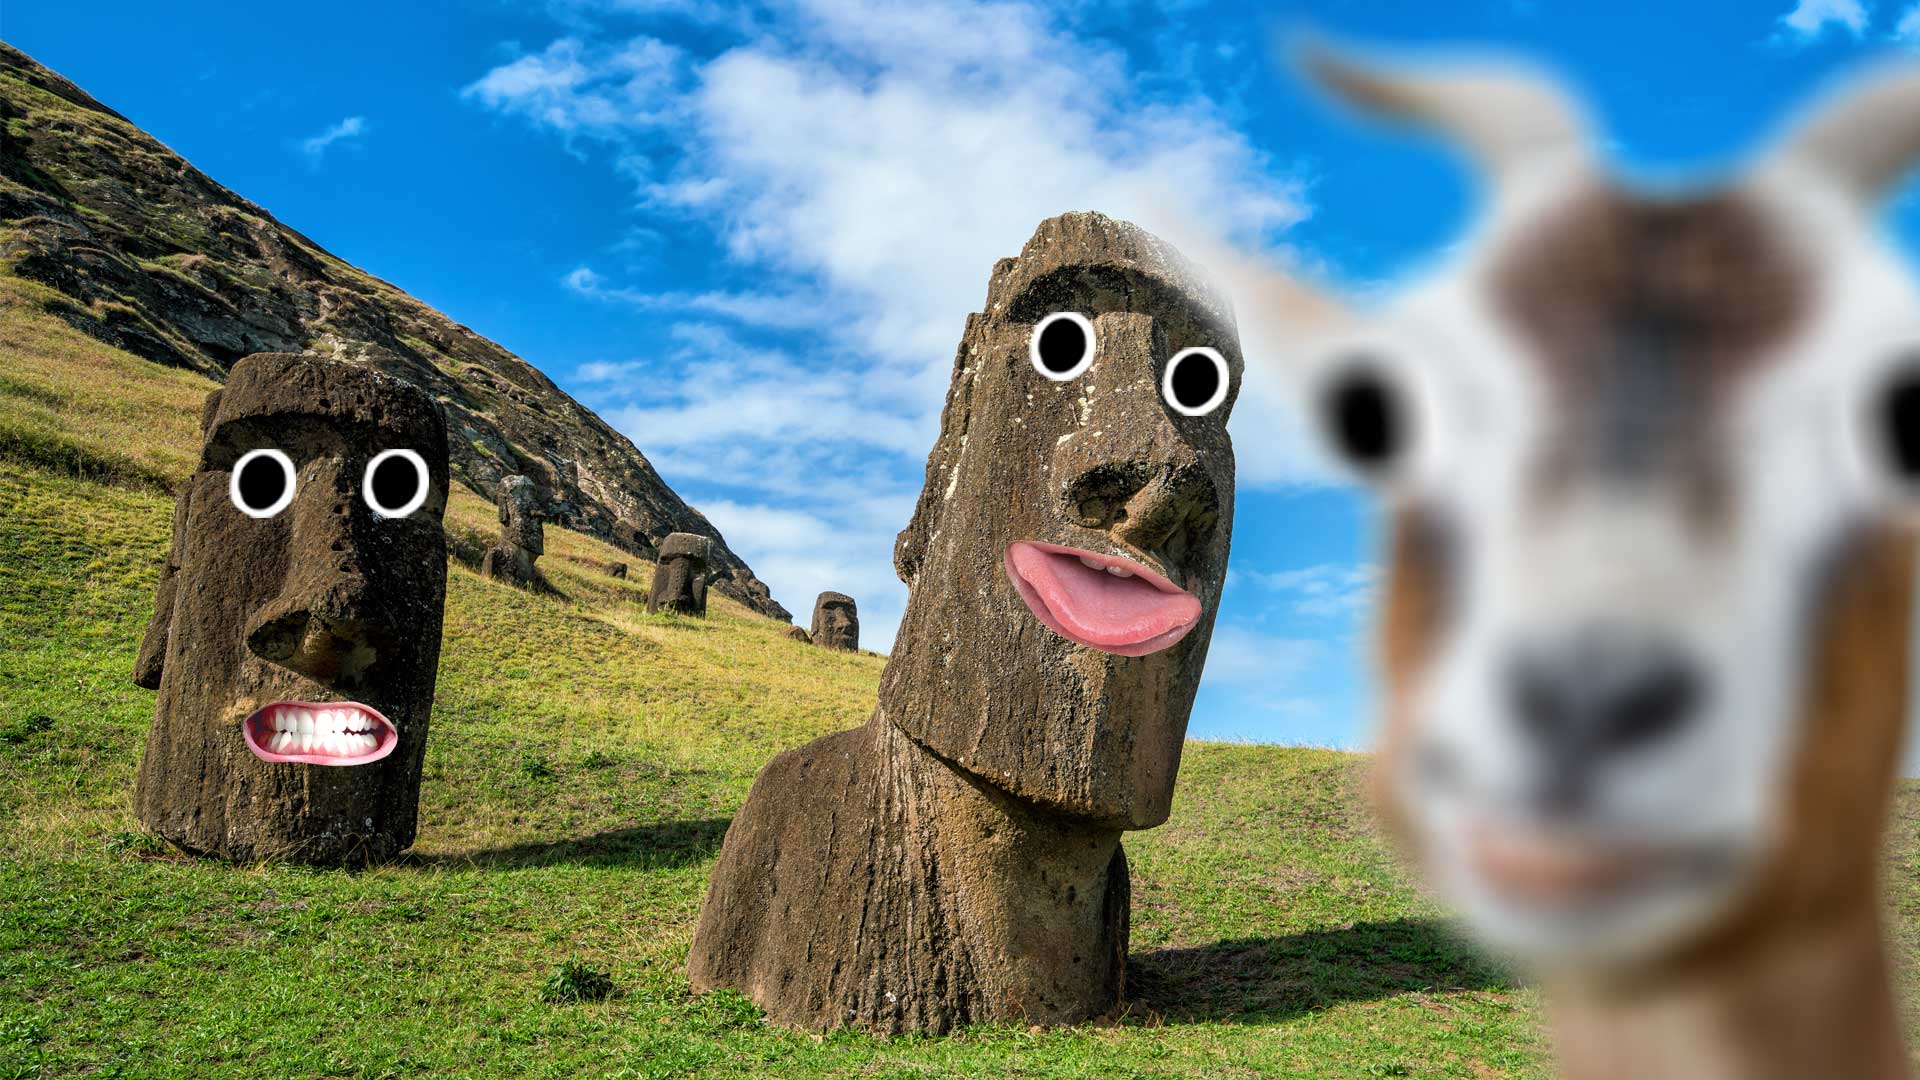 Easter Island